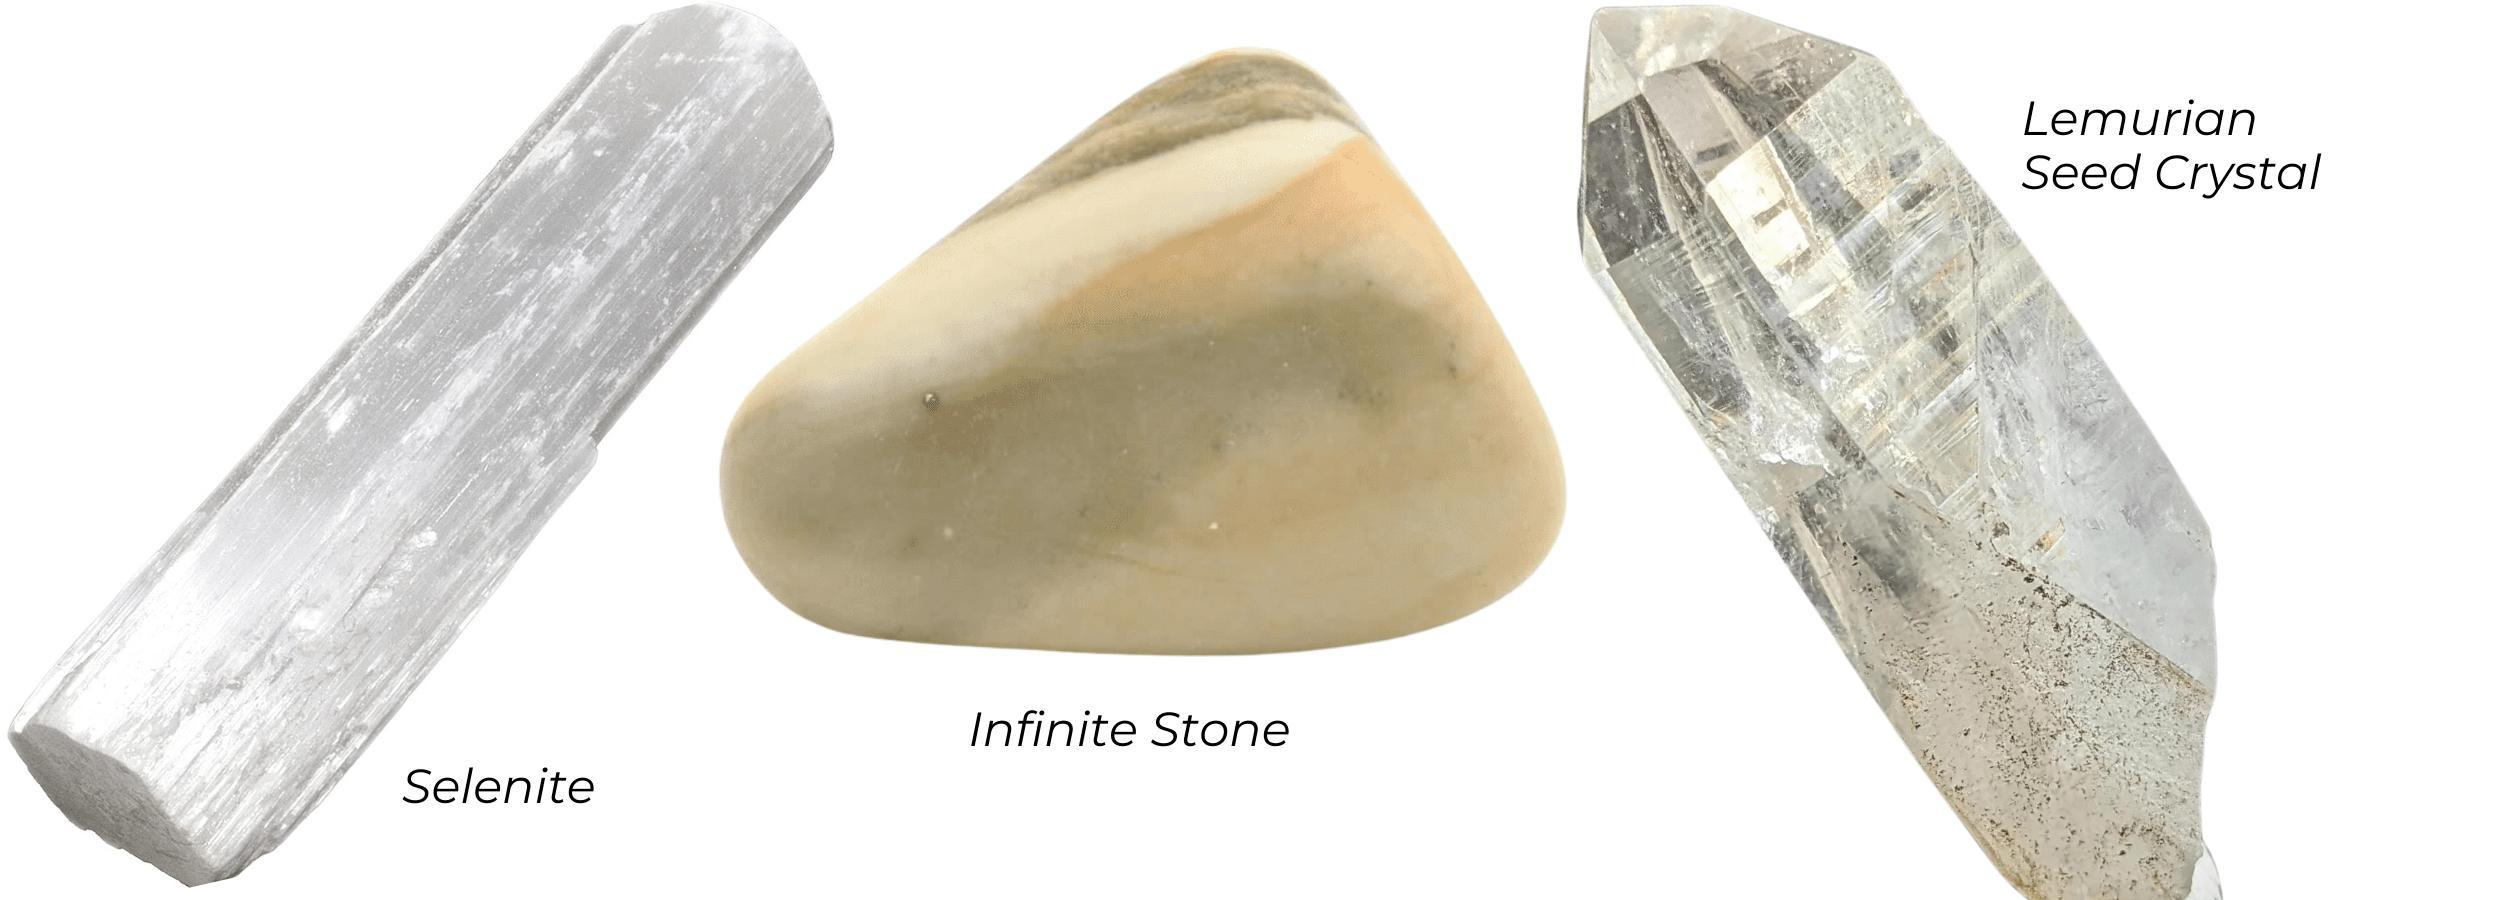 Selenite, Infinity Stone and Lemurian Seed Crystal: Good meditation crystals